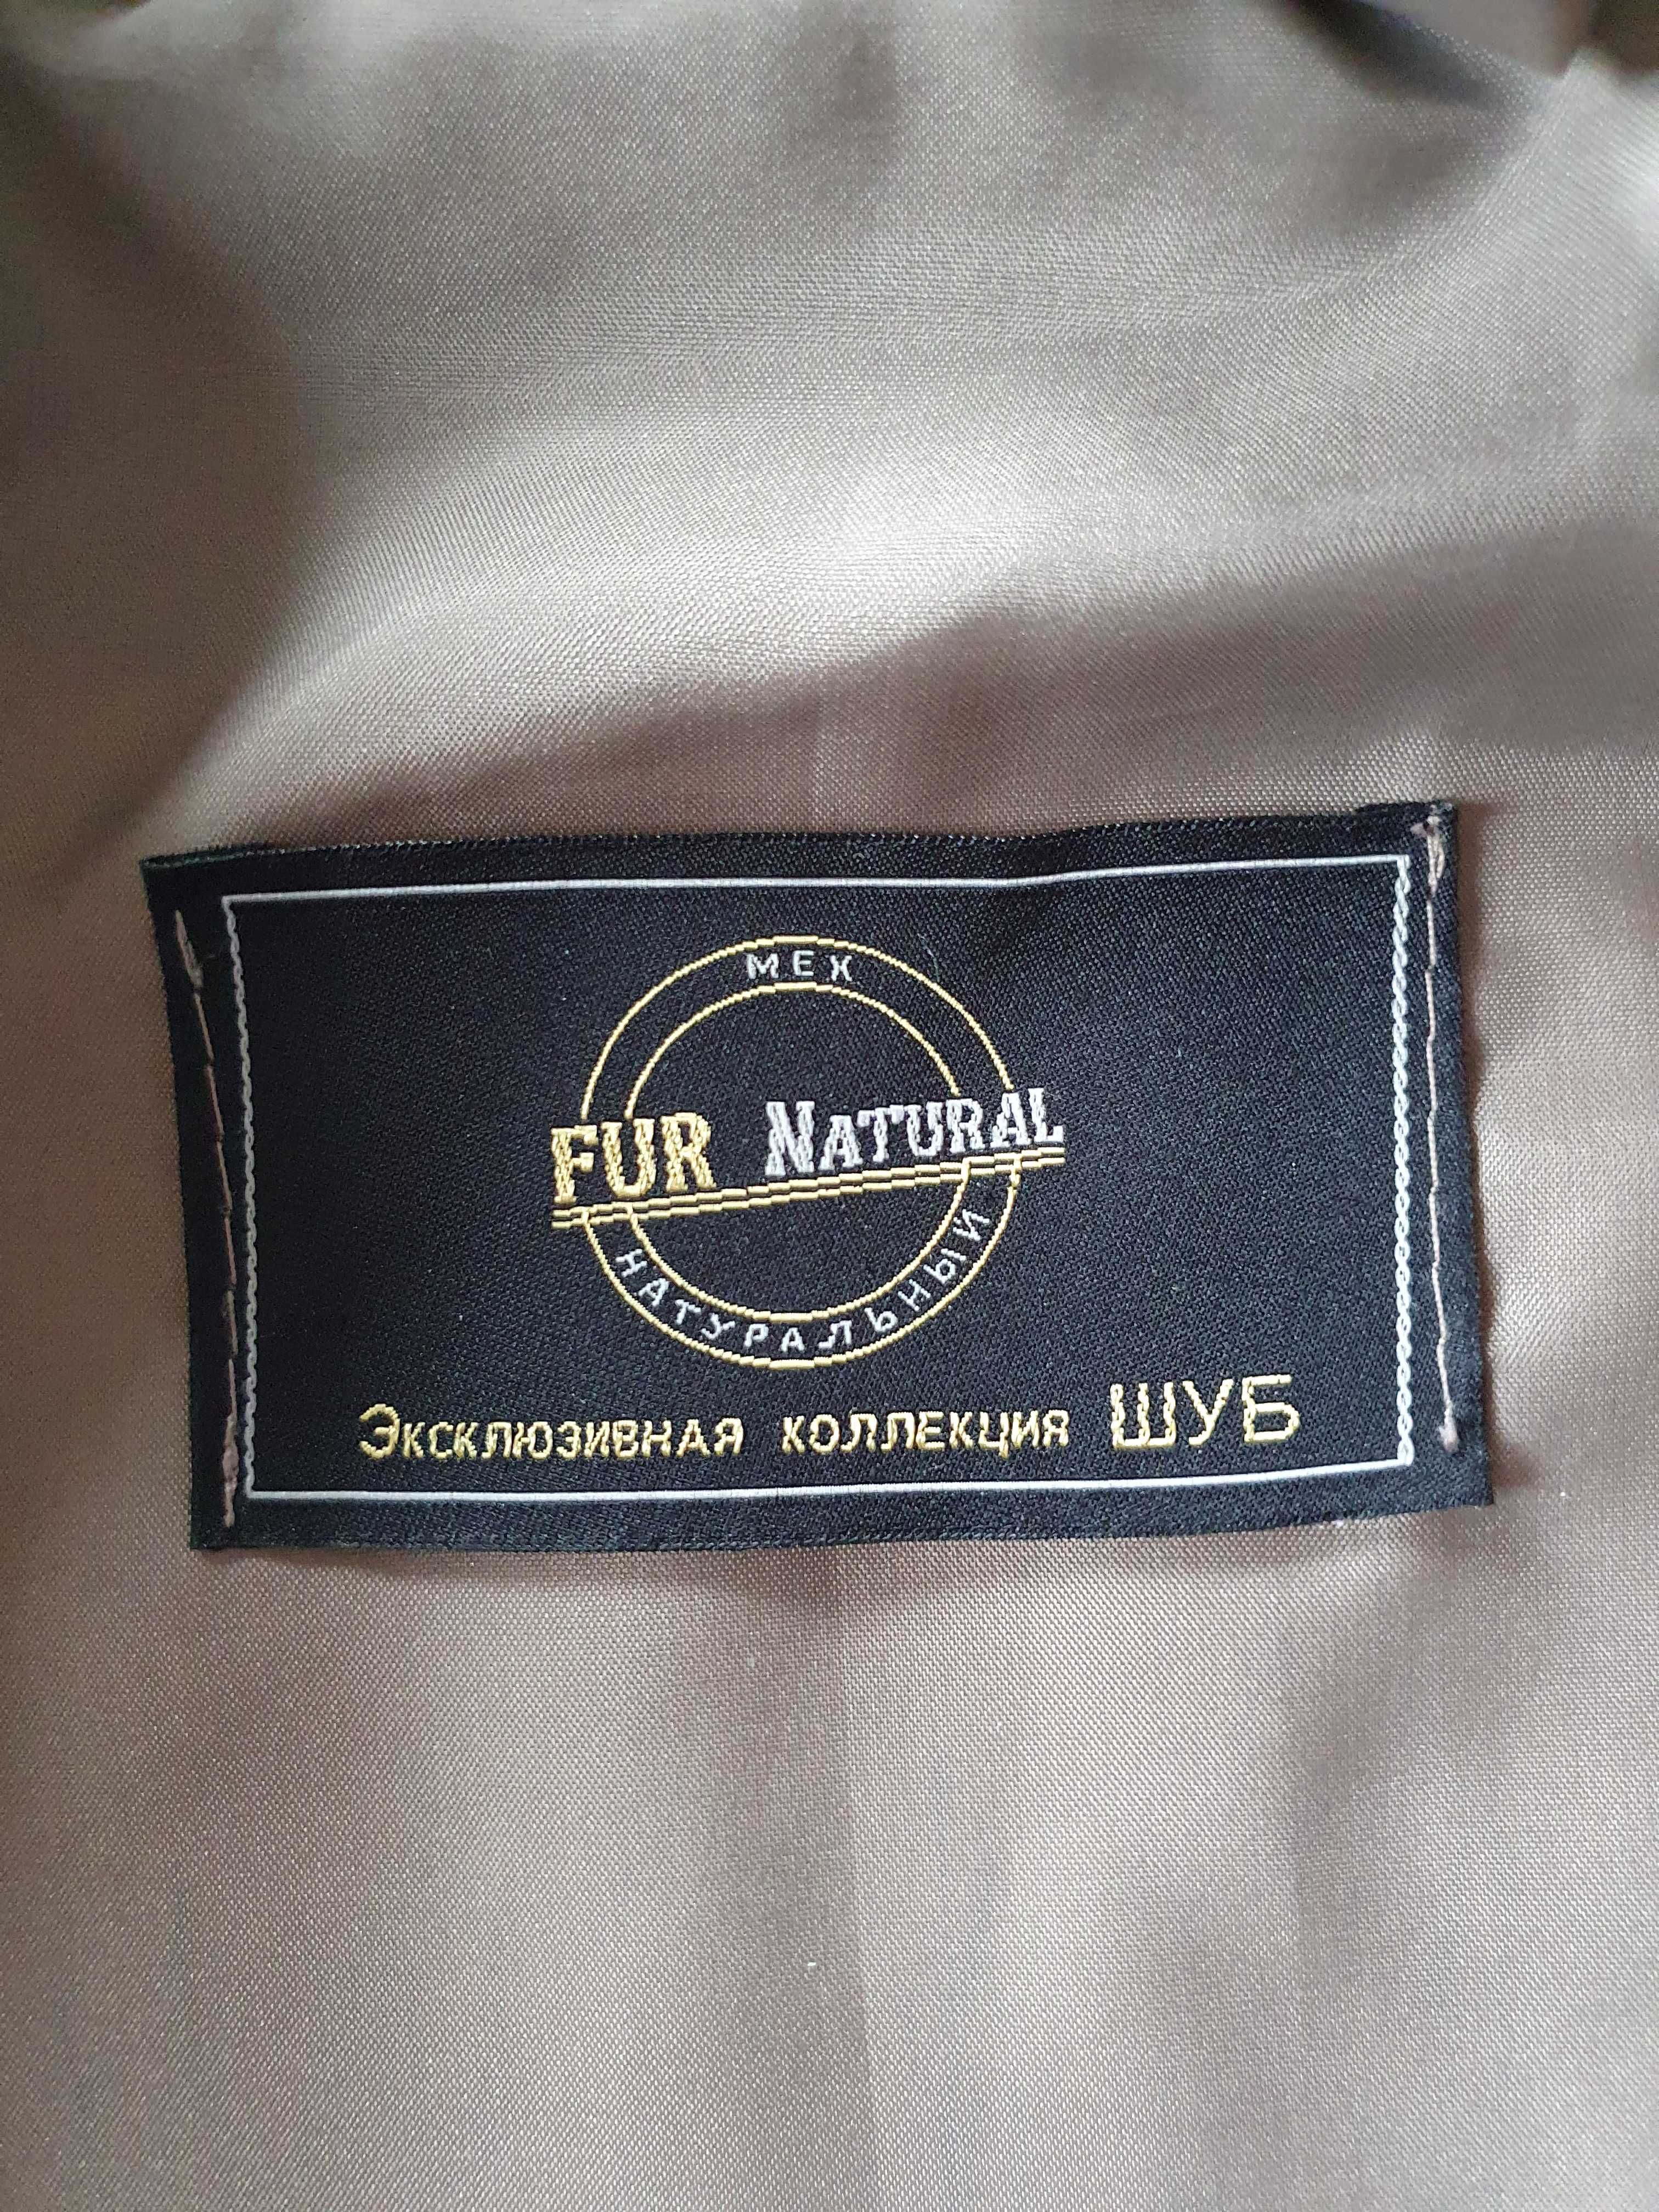 Шуба Fur Natural, натуральный мех, мутон, норка